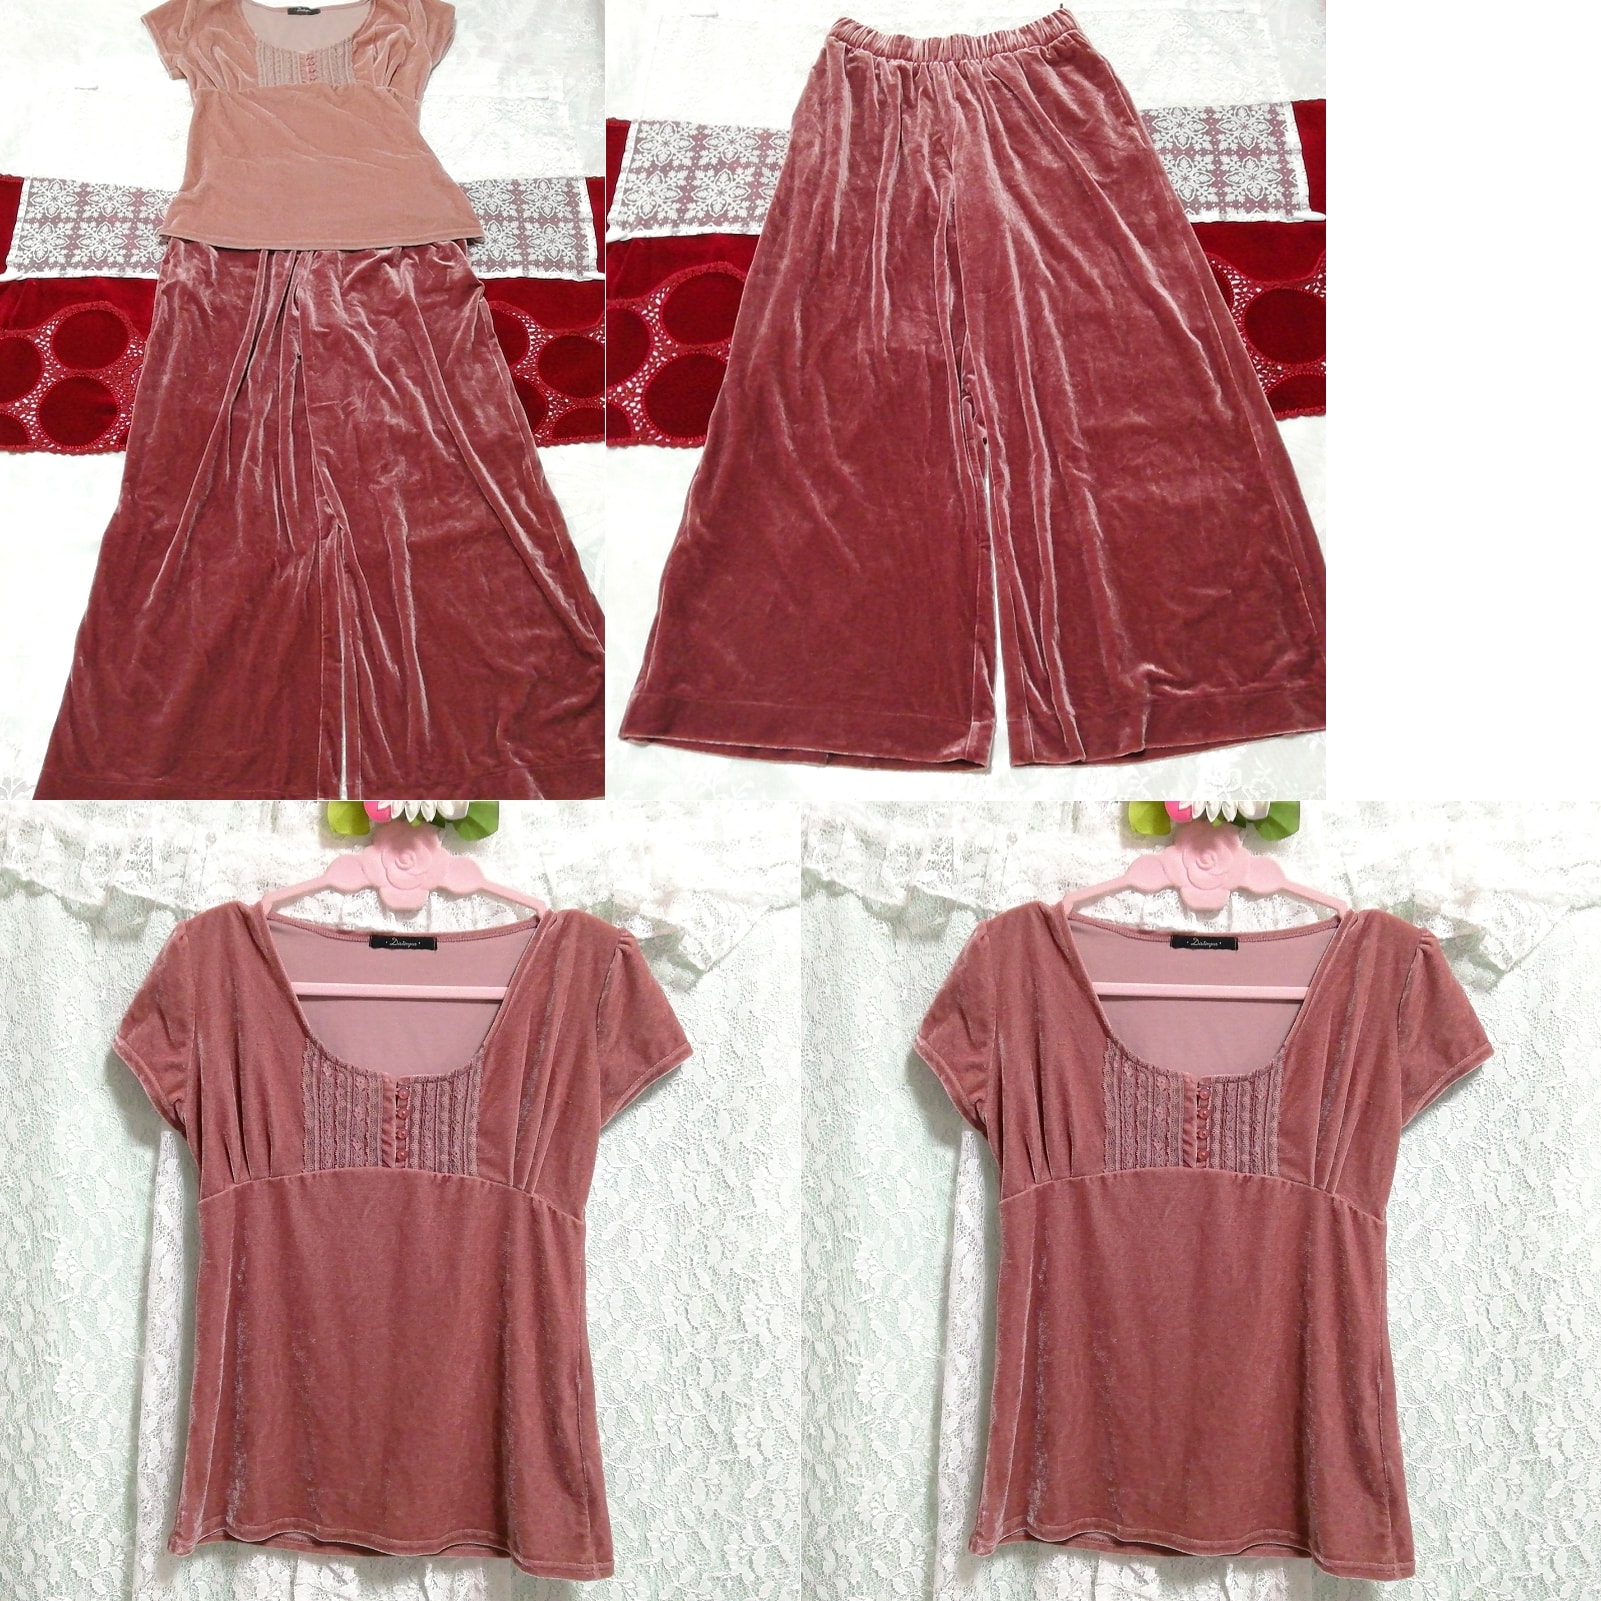 Rosa Kurzarm-Tunika-Negligé-Nachthemd, rosaroter Veloursrock, 2 Stück, Mode, Frauenmode, Nachtwäsche, Pyjama